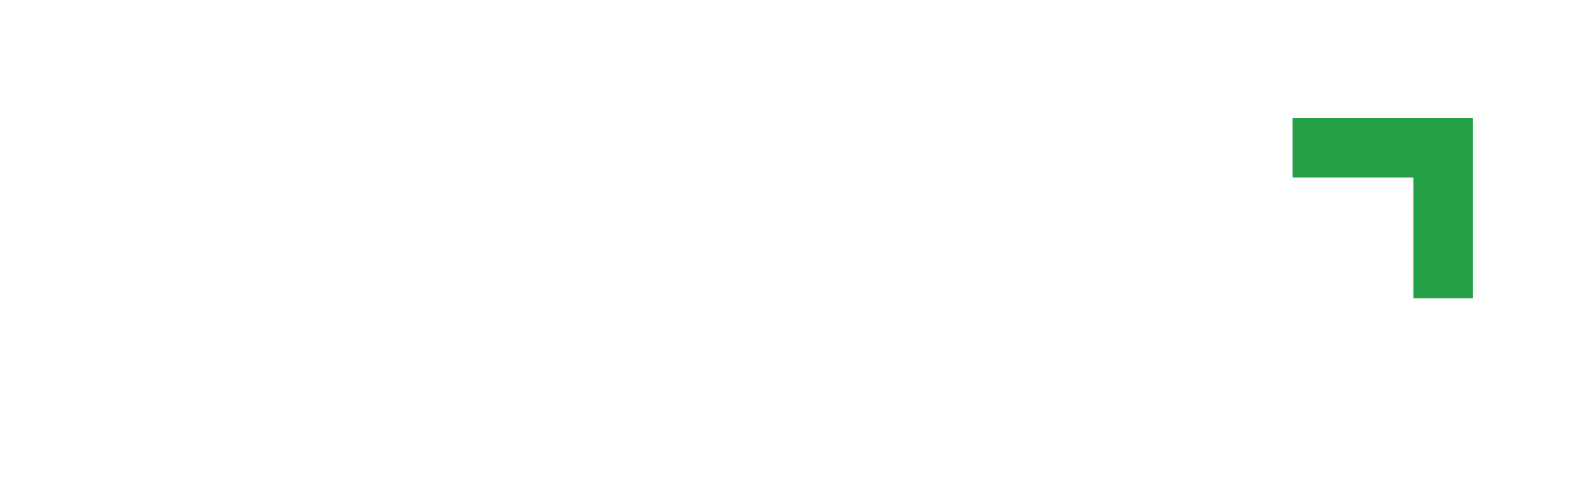 Jazan Development and Investment (JAZADCO)  logo grand pour les fonds sombres (PNG transparent)